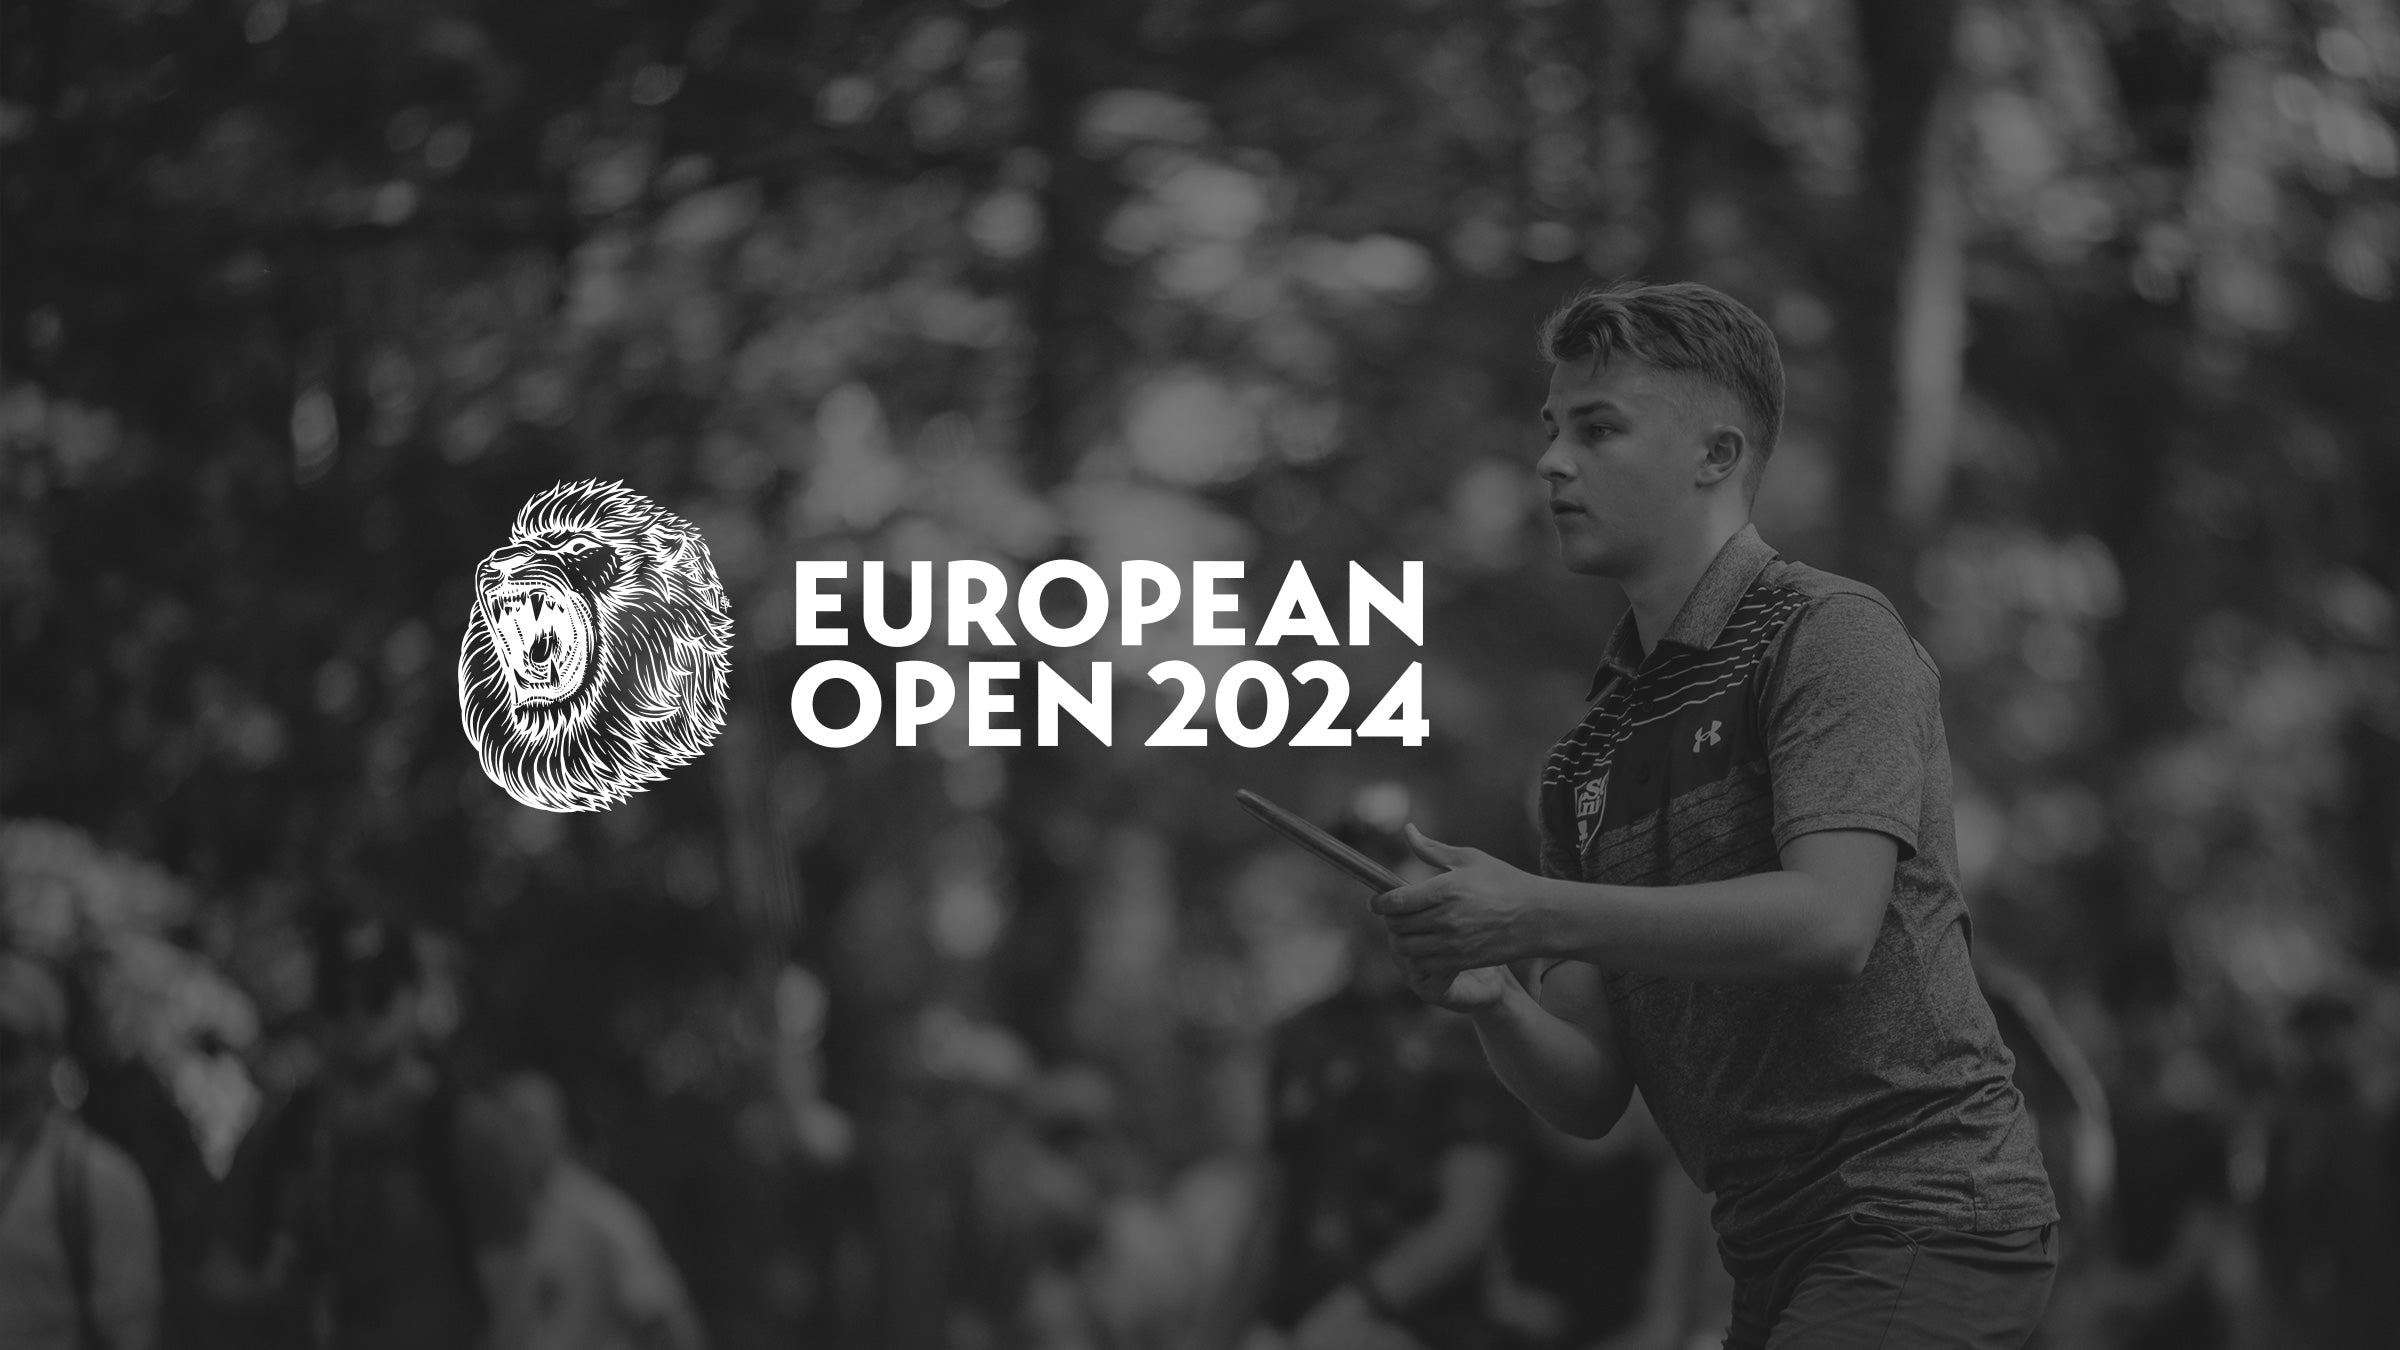 European Open Online Pro Shop